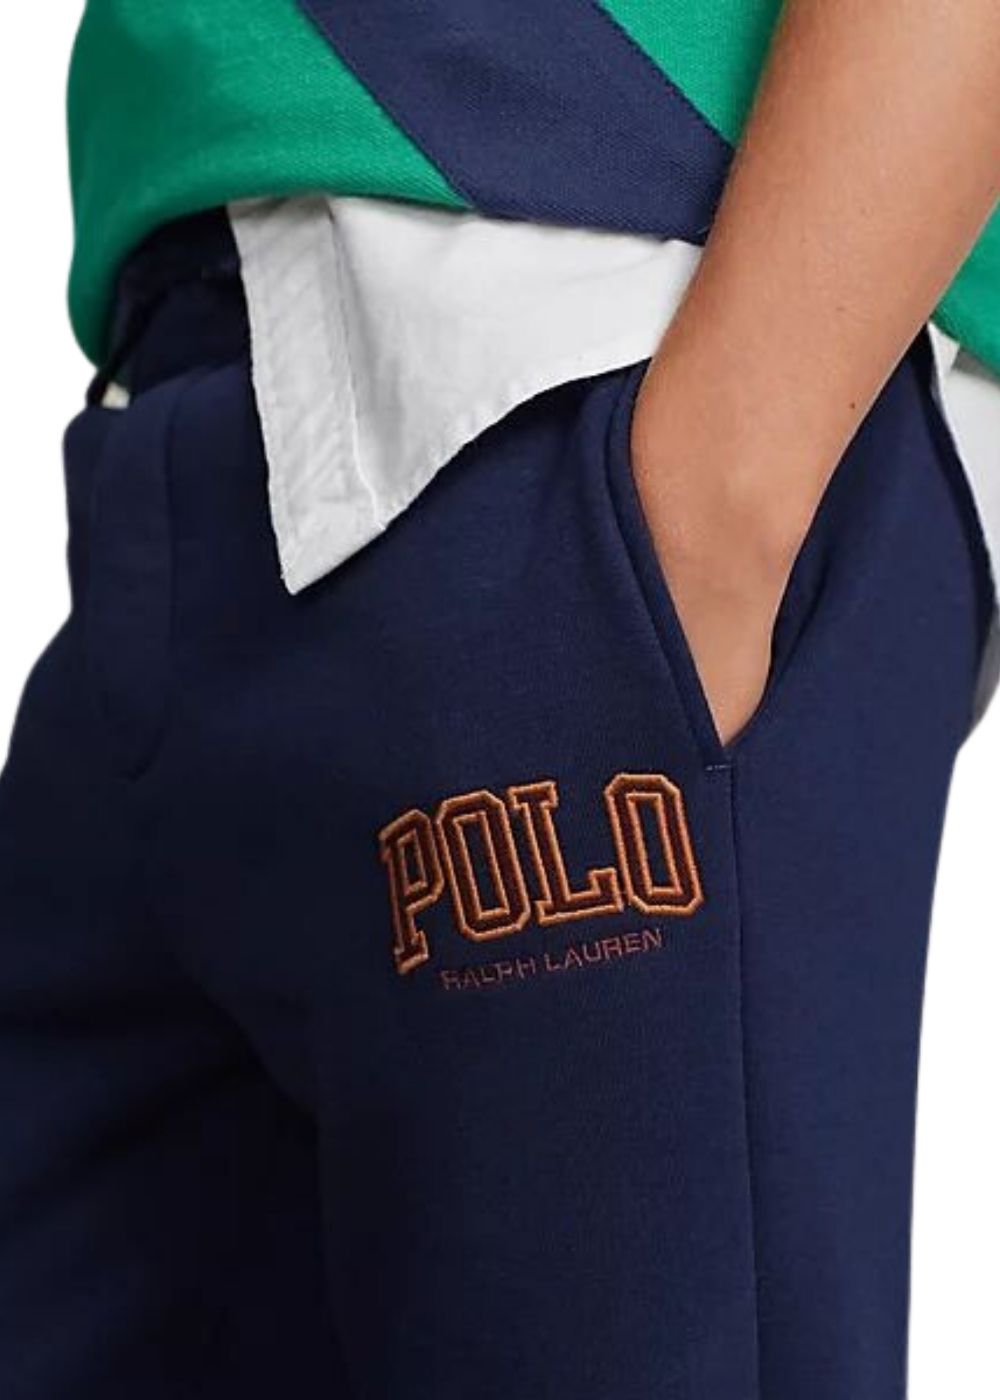 Featured image for “Polo Ralph Lauren Pantaloni Felpa”